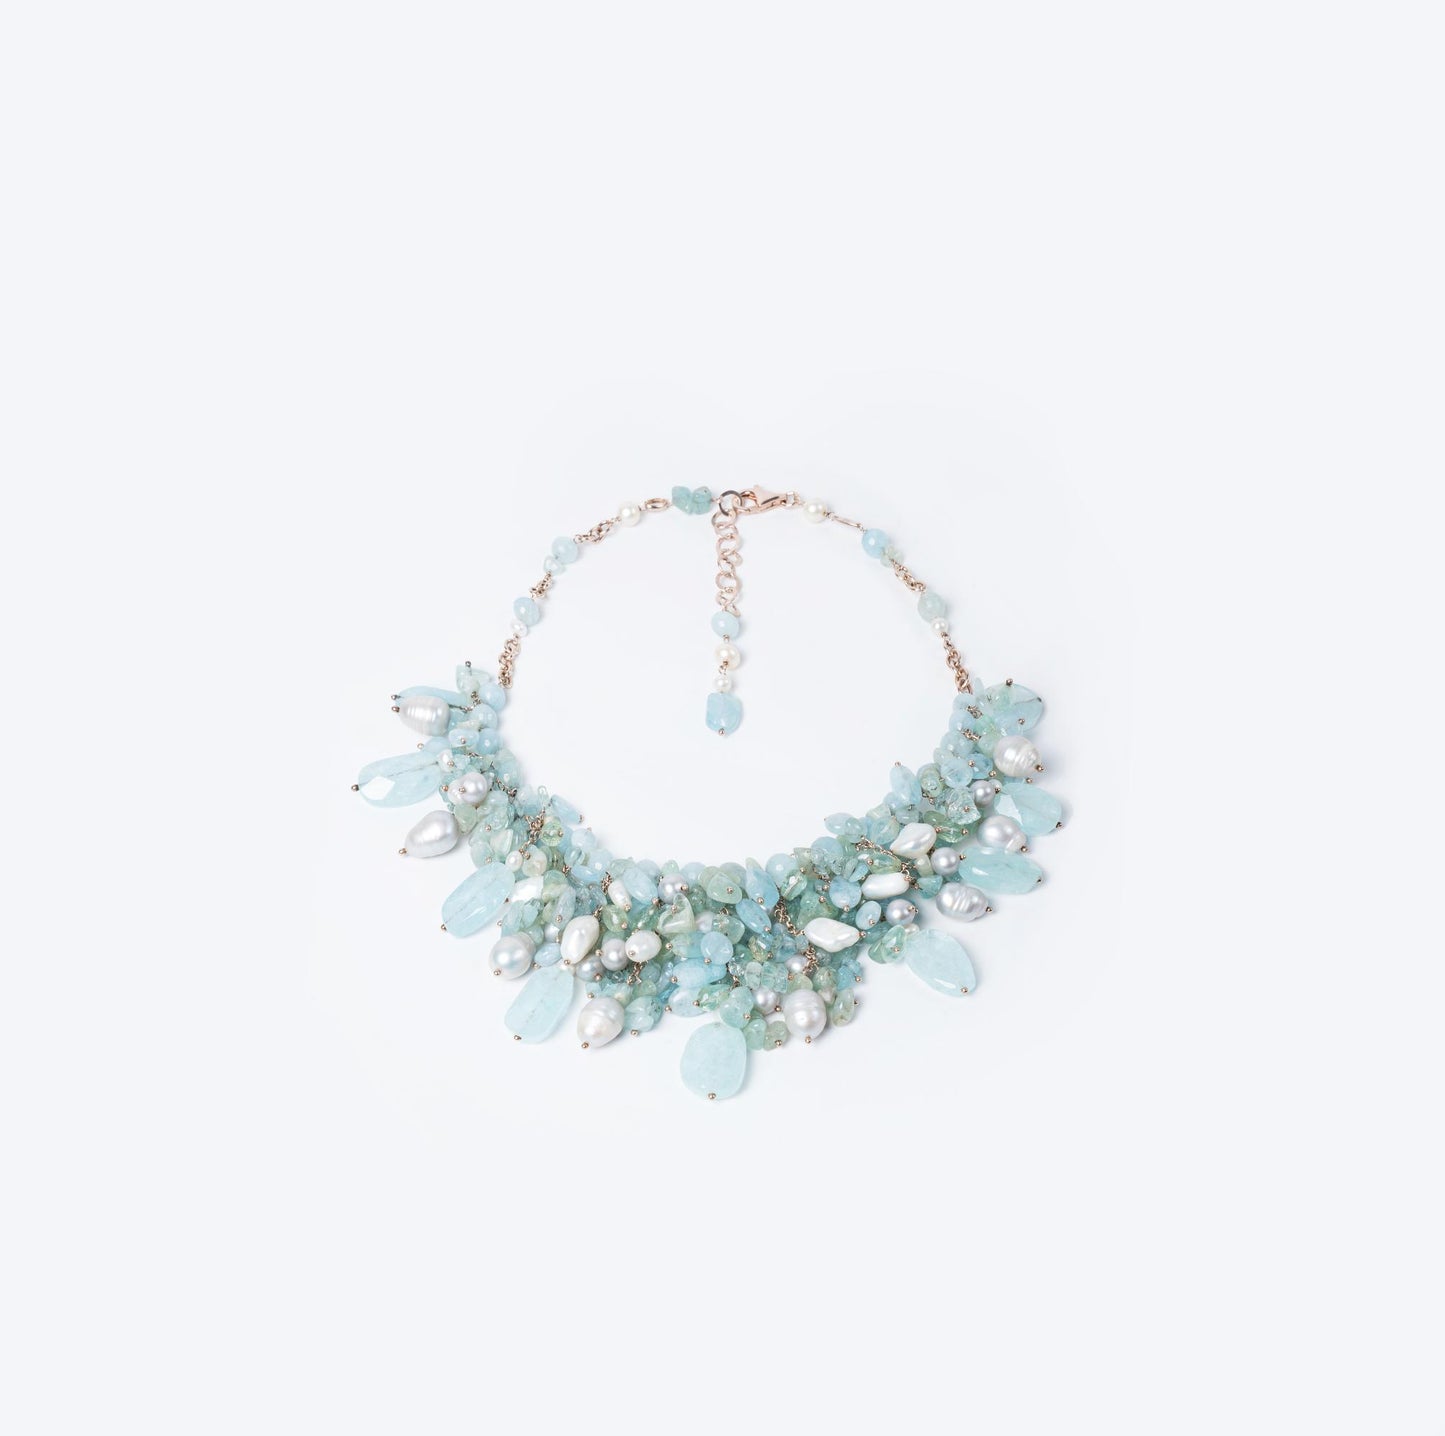 New Handamade Unique Sky-Blue Tourmalines Necklace - Nelissima Jewelry